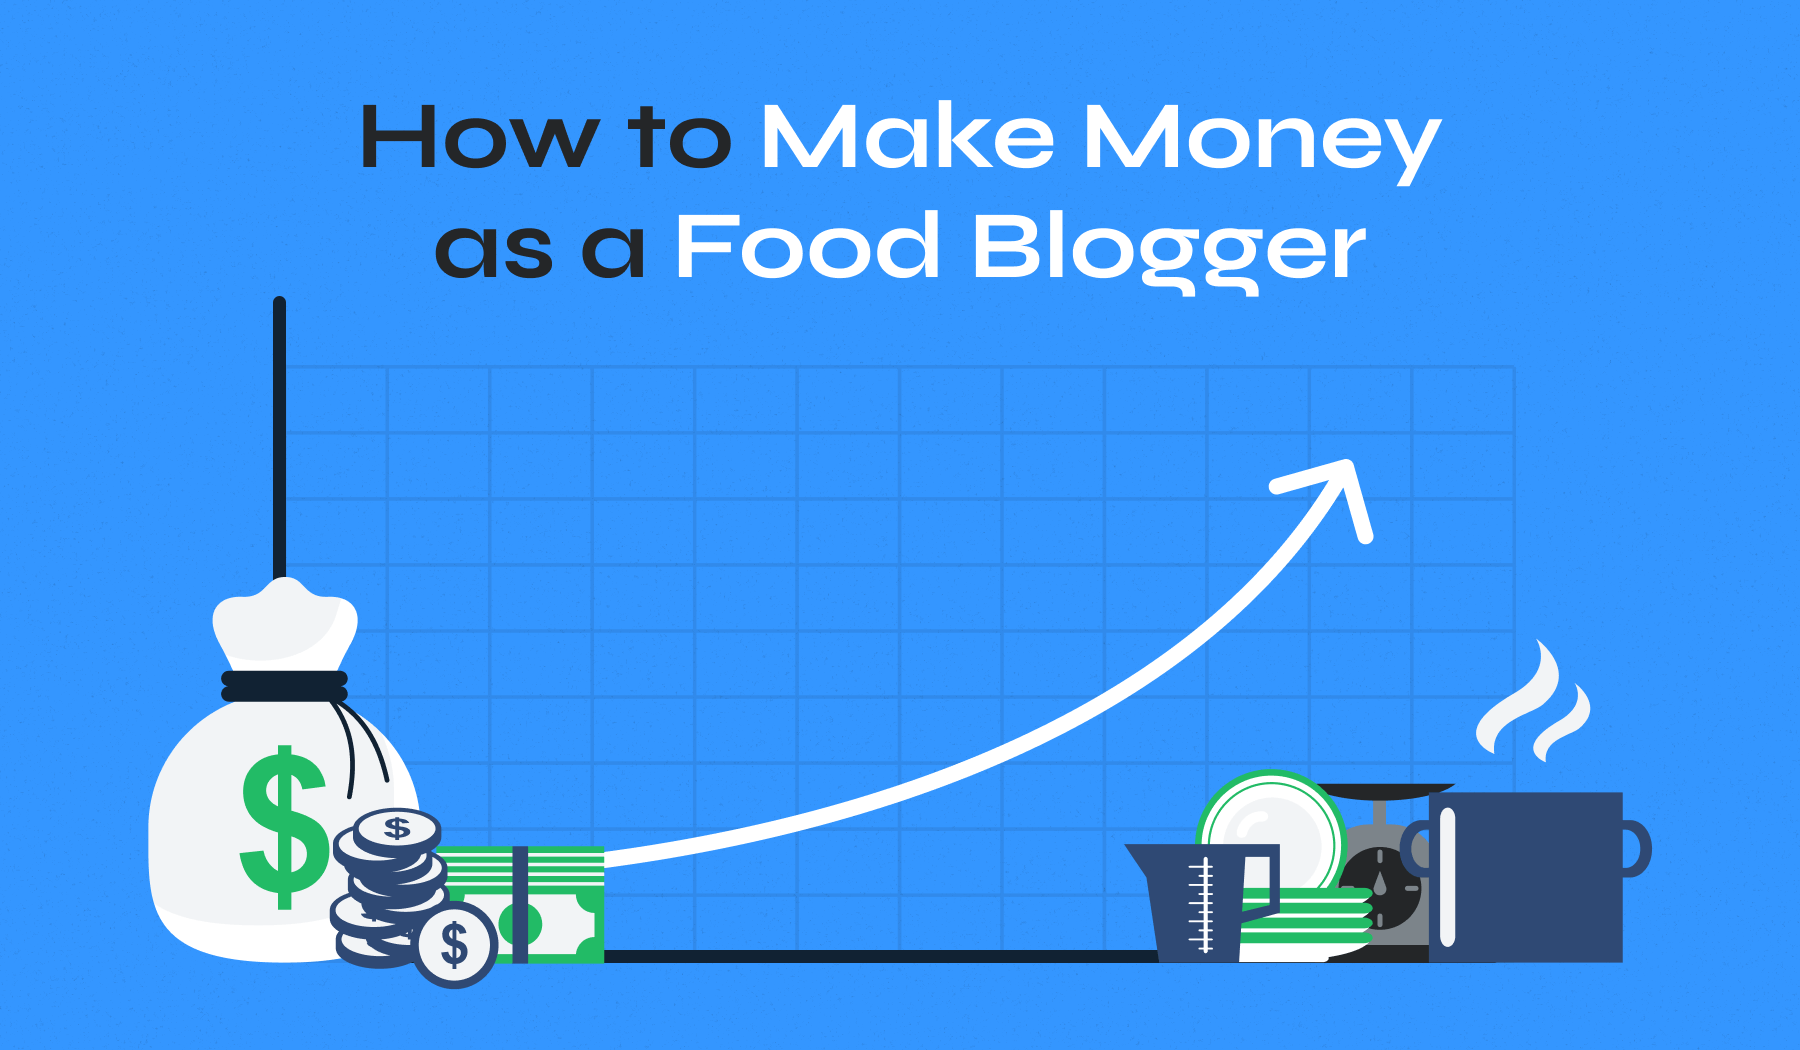 Make Money as a Food Blogger